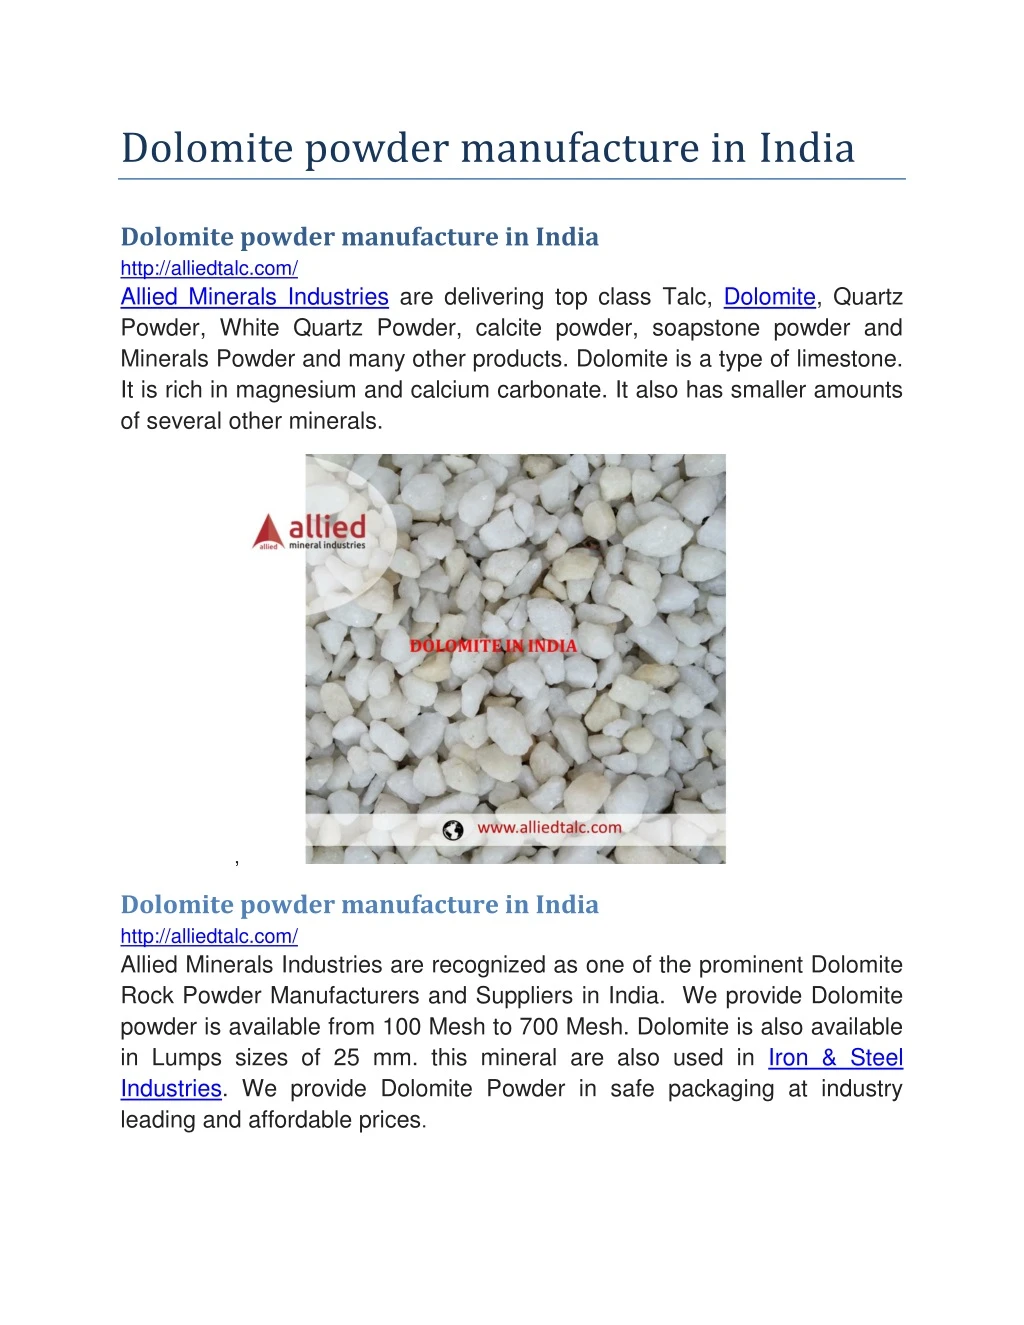 dolomite powder manufacture in india n.